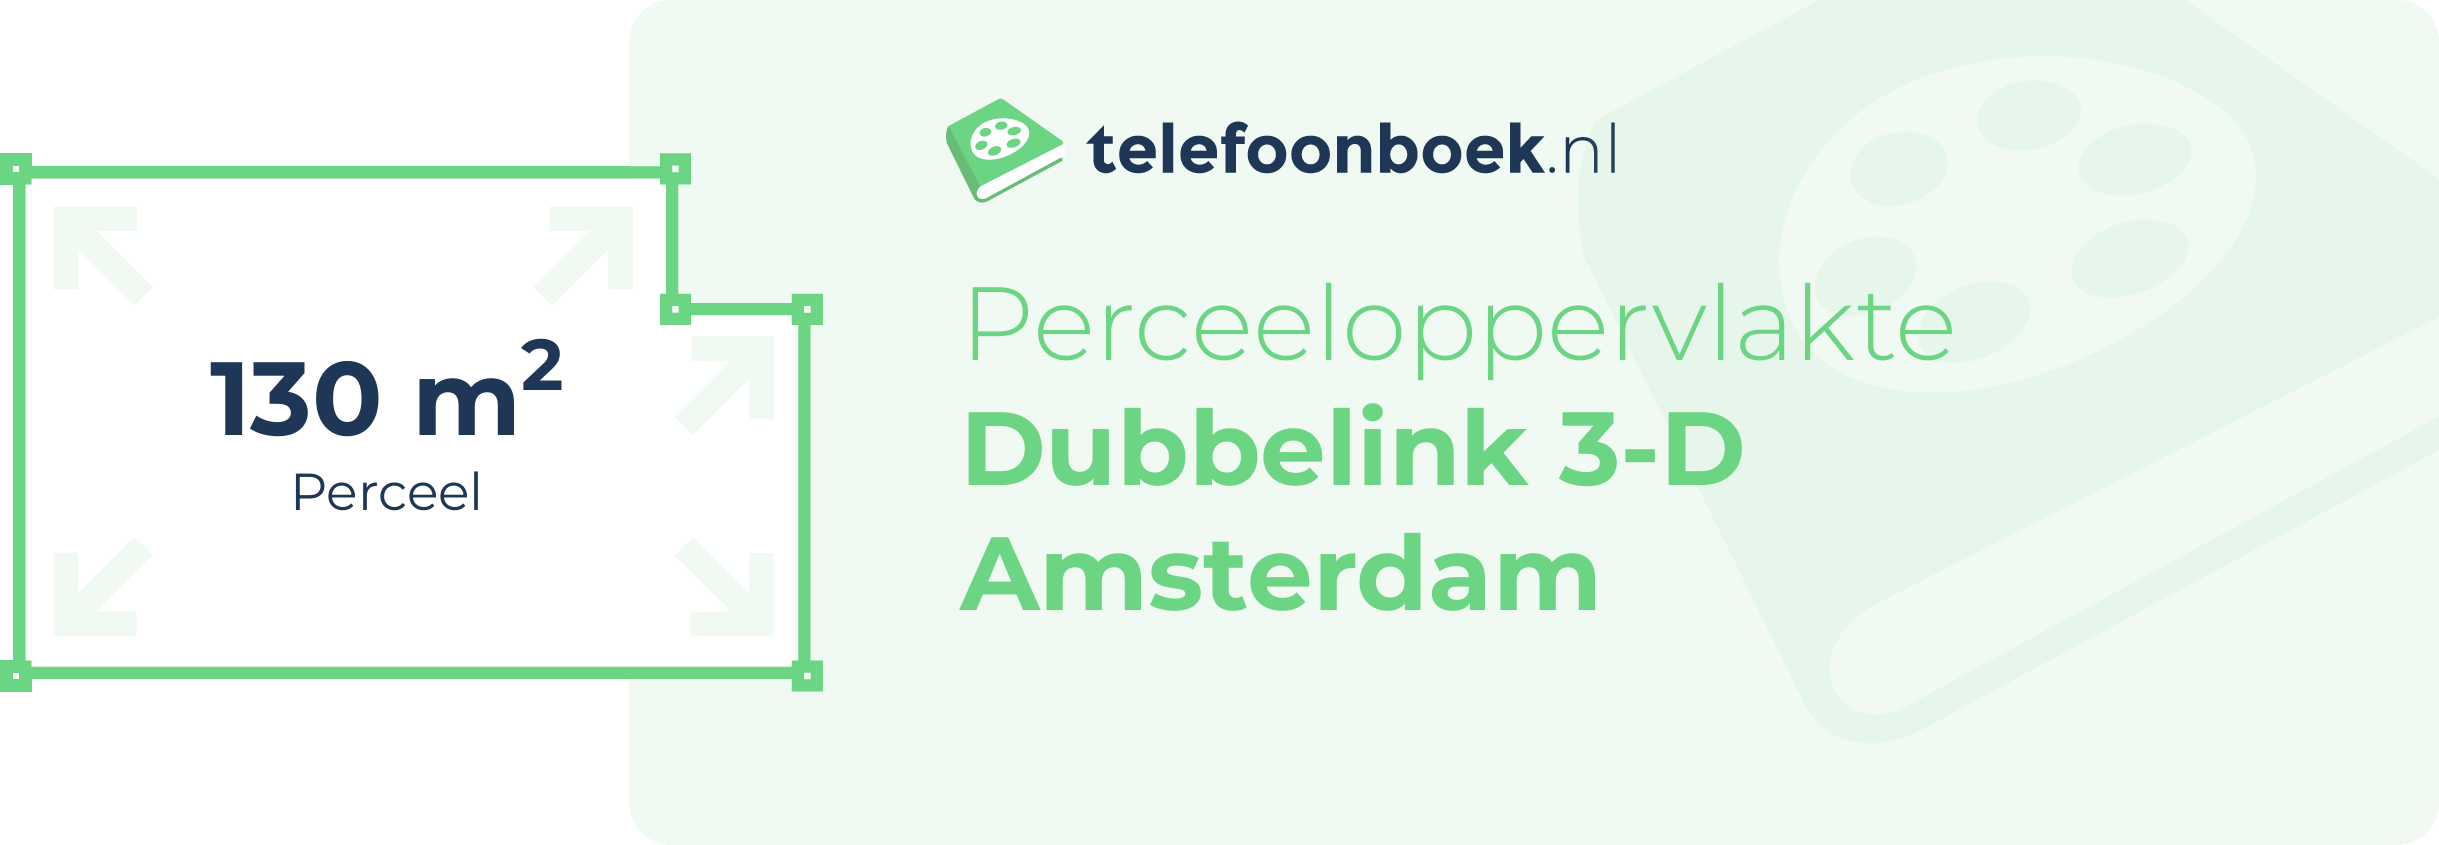 Perceeloppervlakte Dubbelink 3-D Amsterdam